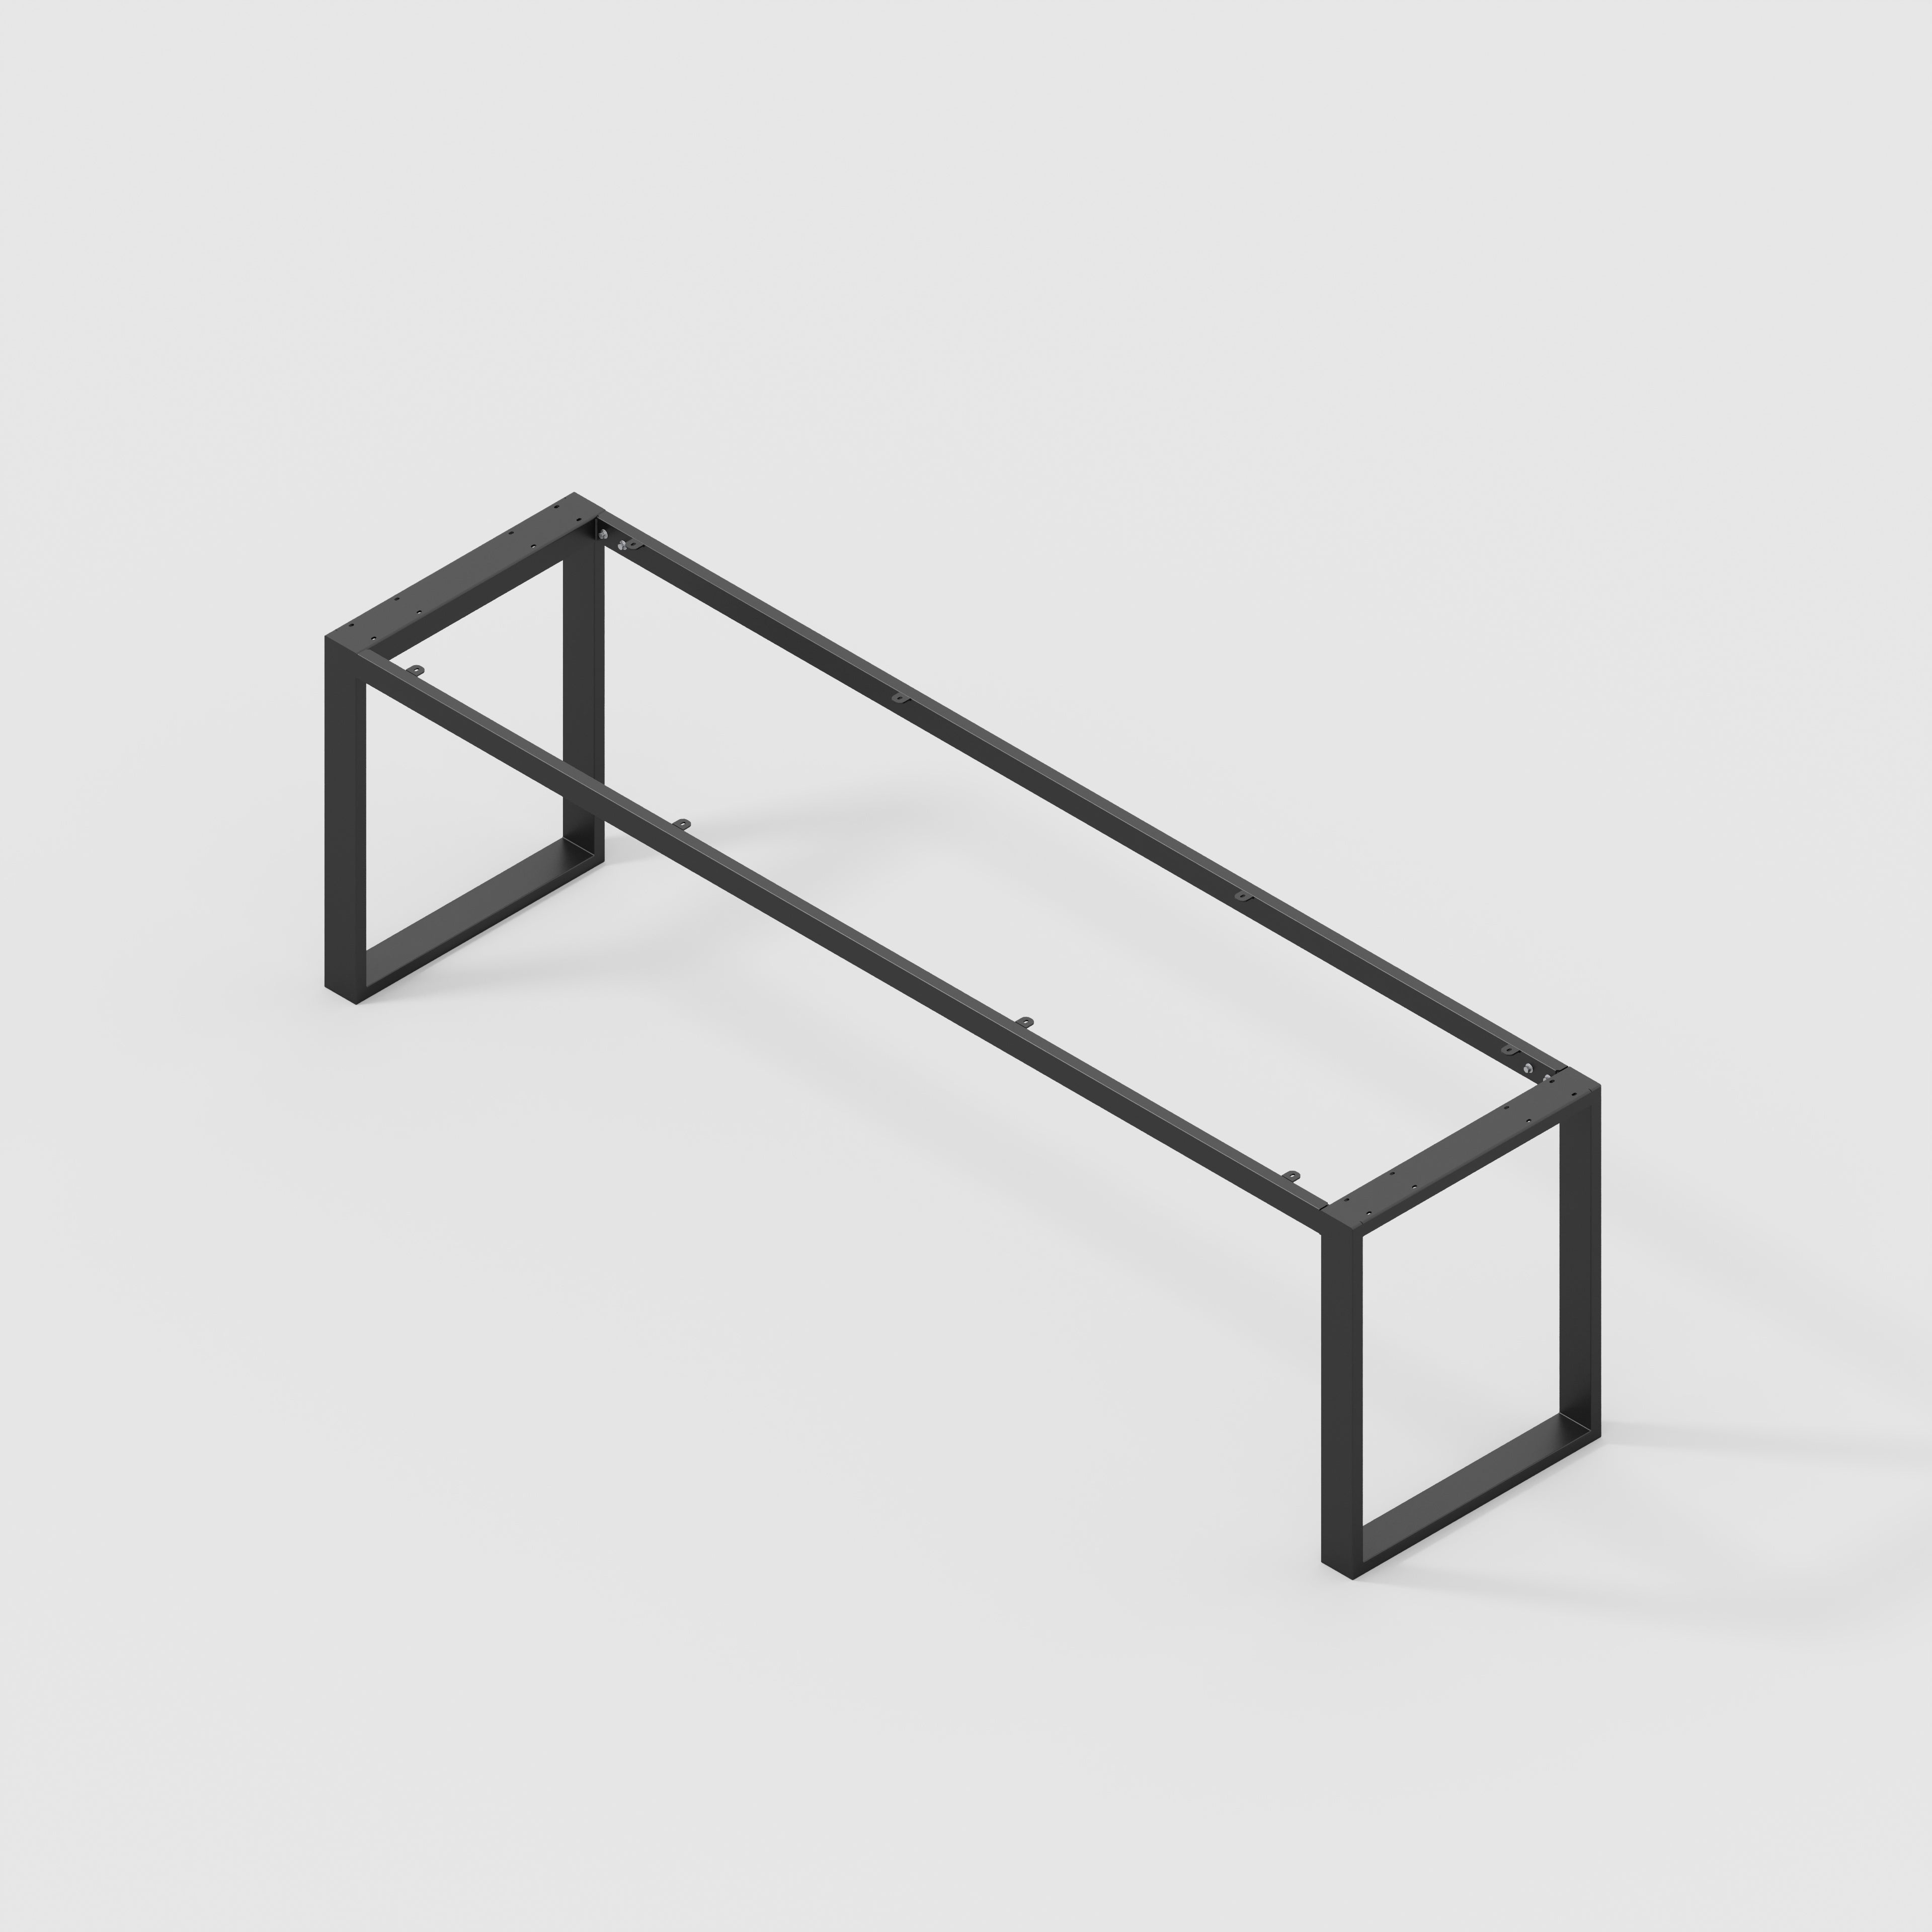 Desk/Table Legs - Square Industrial Frame